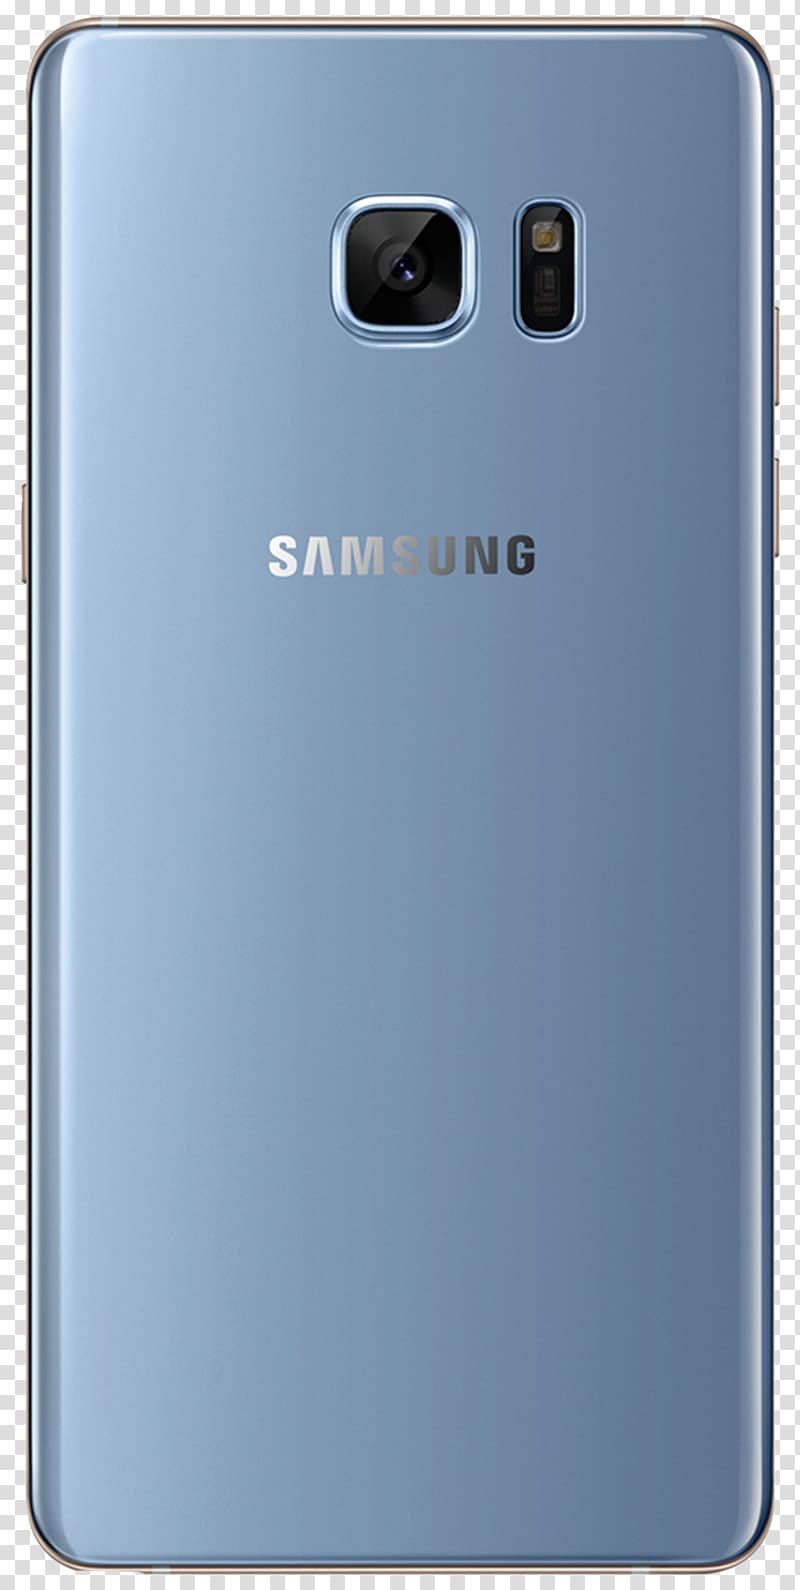 Samsung Galaxy Note 7 Samsung Galaxy J2 Pro Samsung Galaxy S III Telephone, samsung transparent background PNG clipart